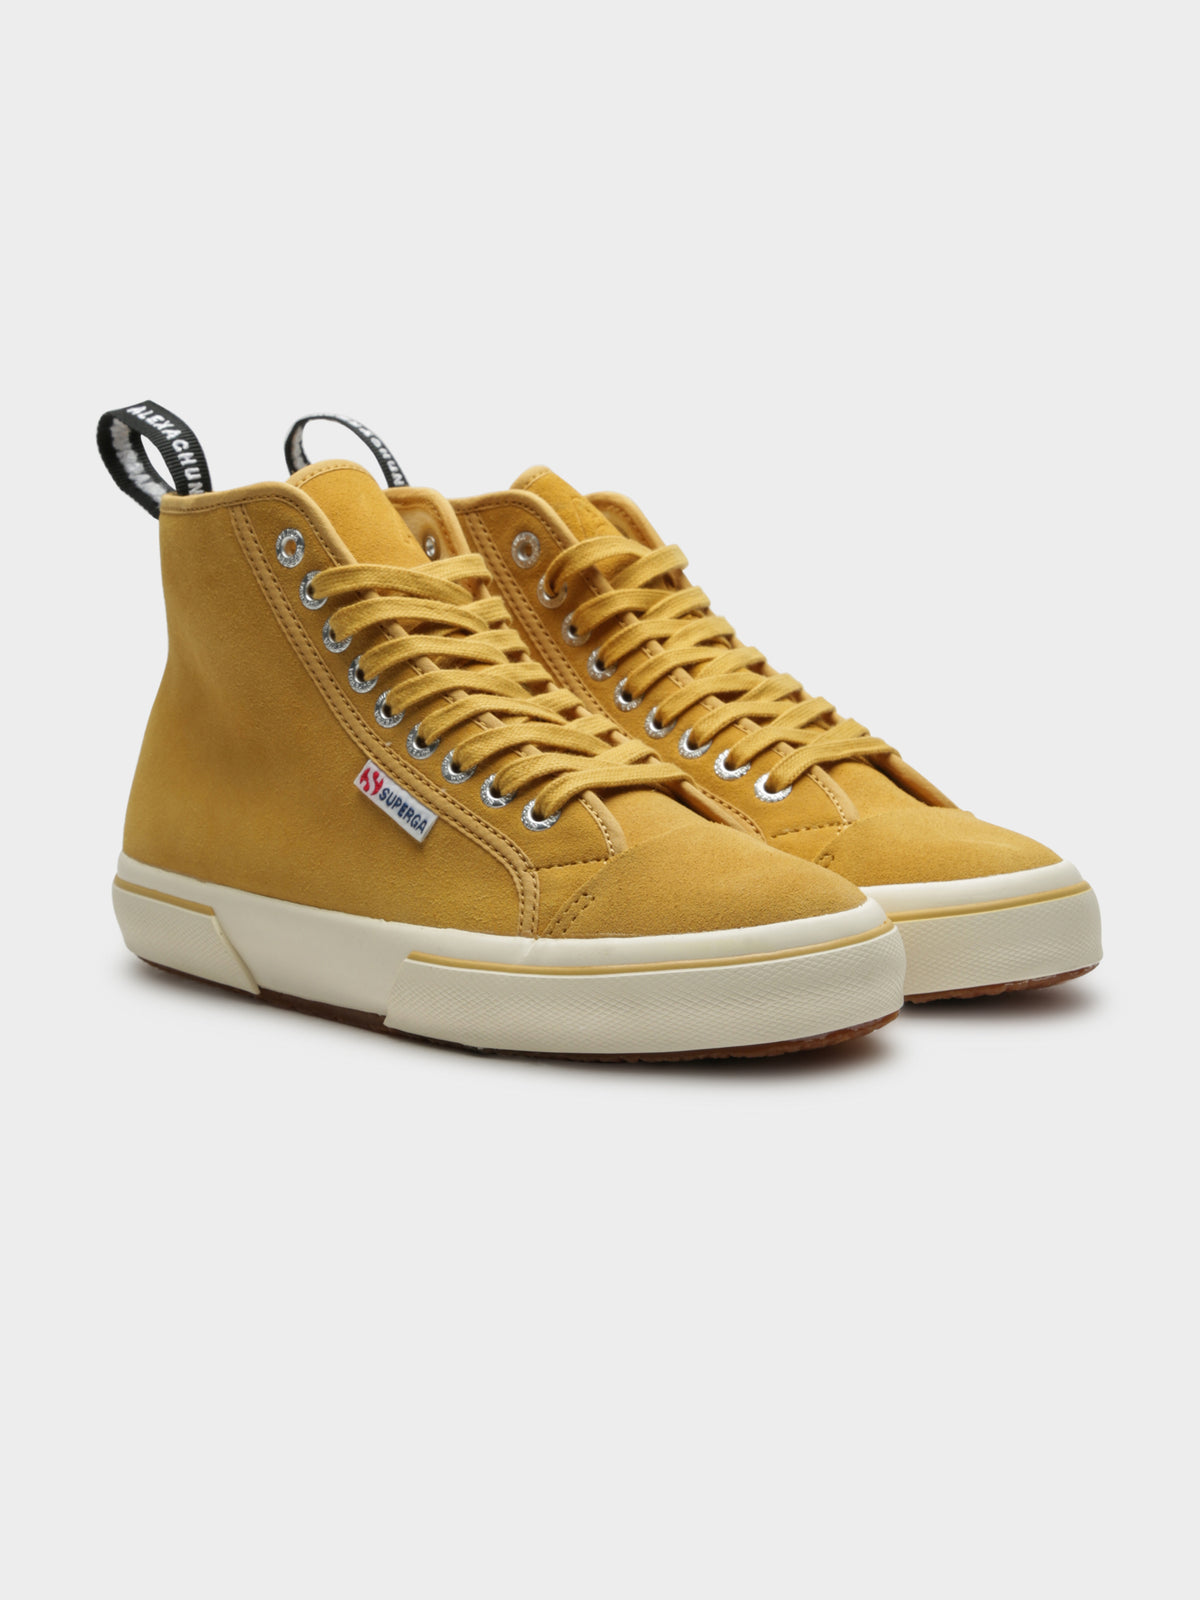 Alexa Chung 2243 Sue High-Top Sneakers in Mustard Yellow